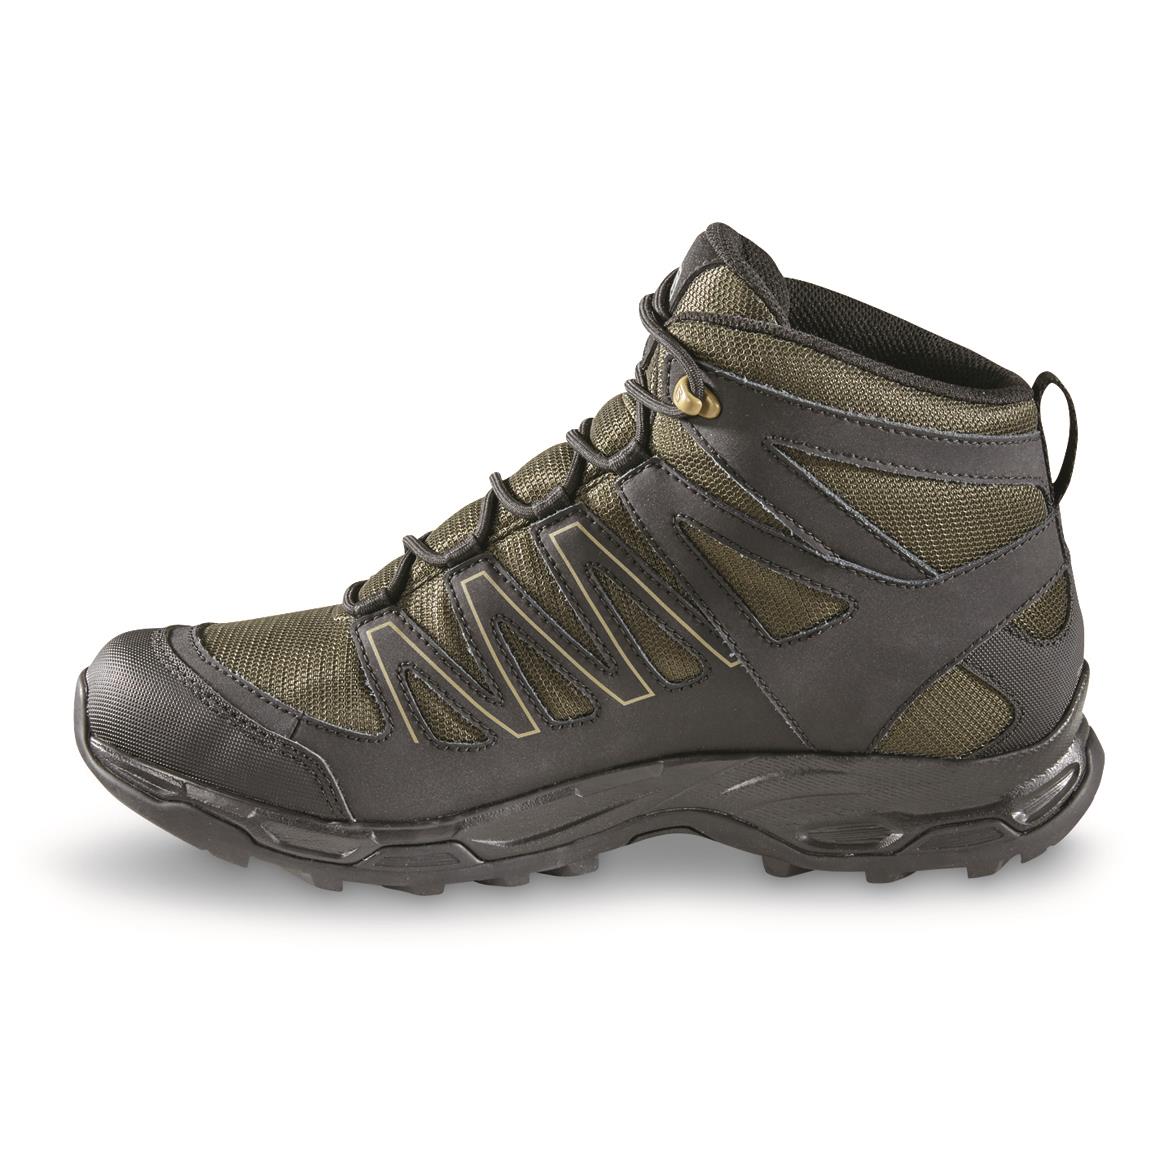 Salomon Men's Pathfinder Mid CSWP Hiking Boots - 697625, Hiking Boots